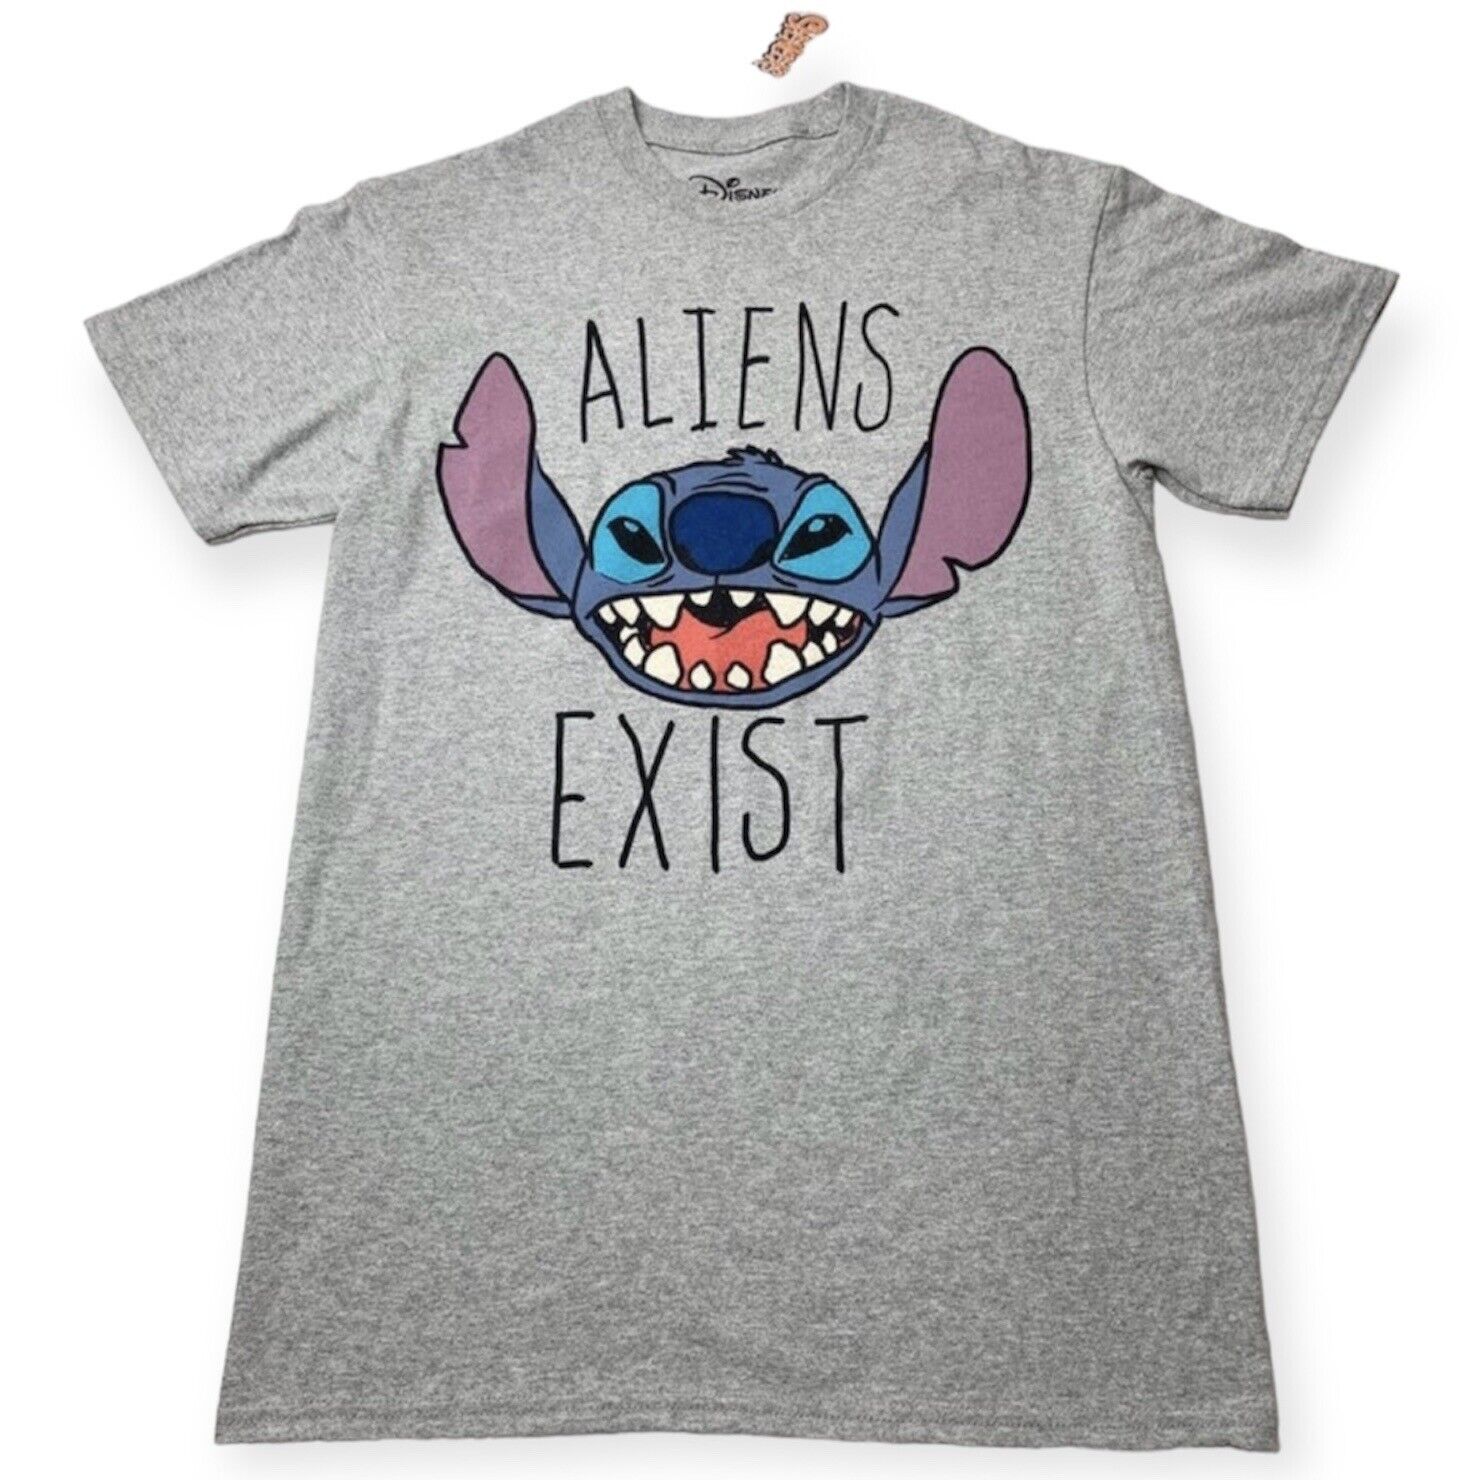 Disney Stitch Aliens Exist T-shirt Adult Size S NWT